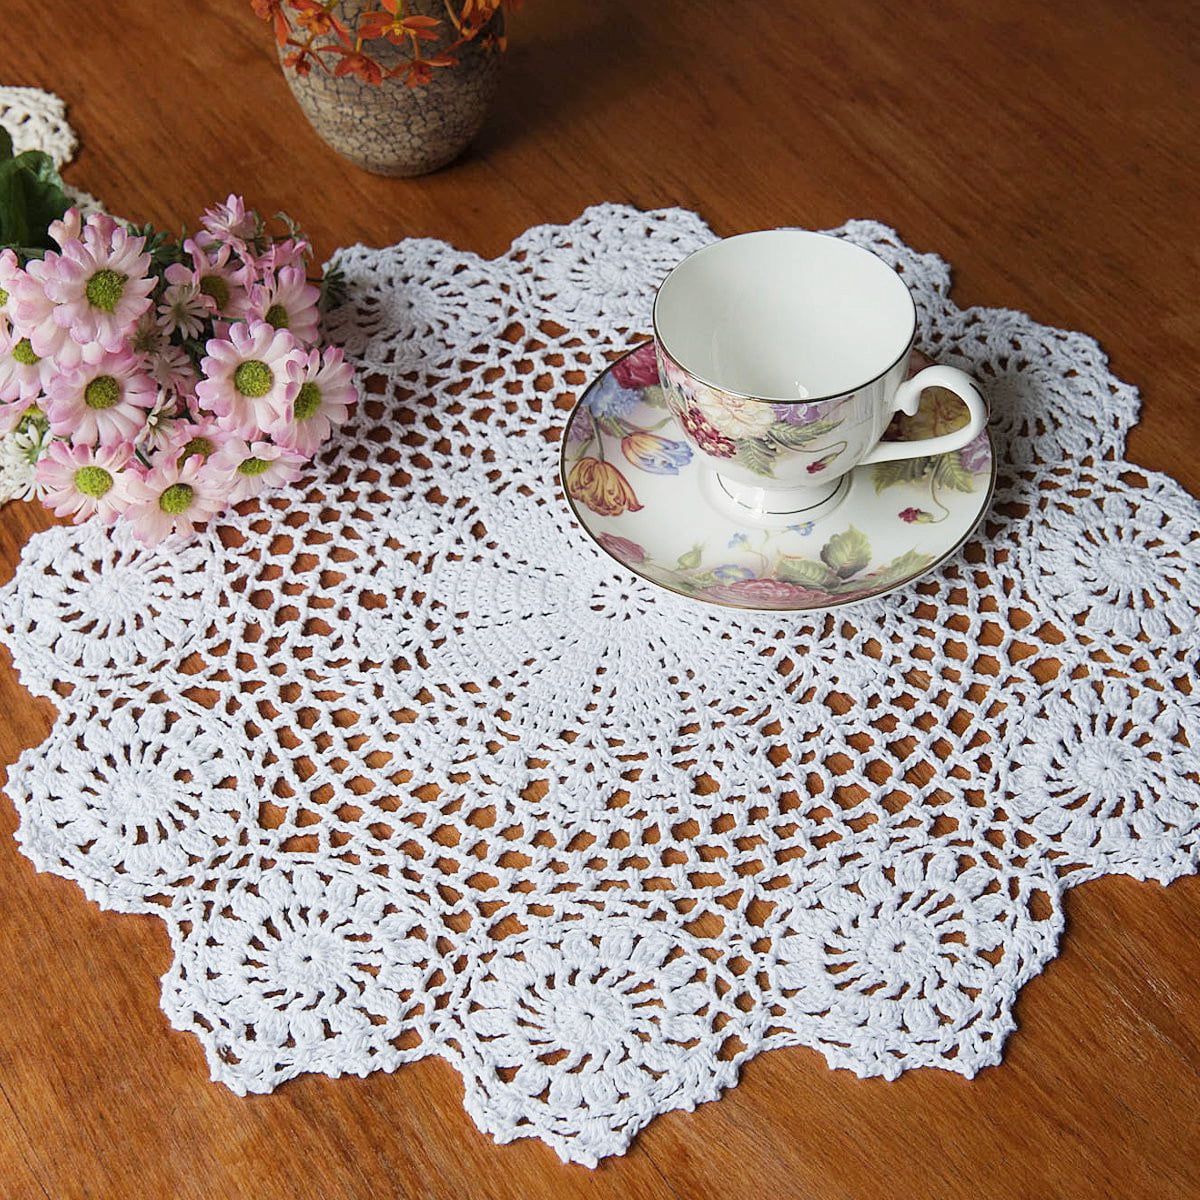 Handmade doily Crochet placemat Crochet lace doily Weddinghome decor Violet crochet doily